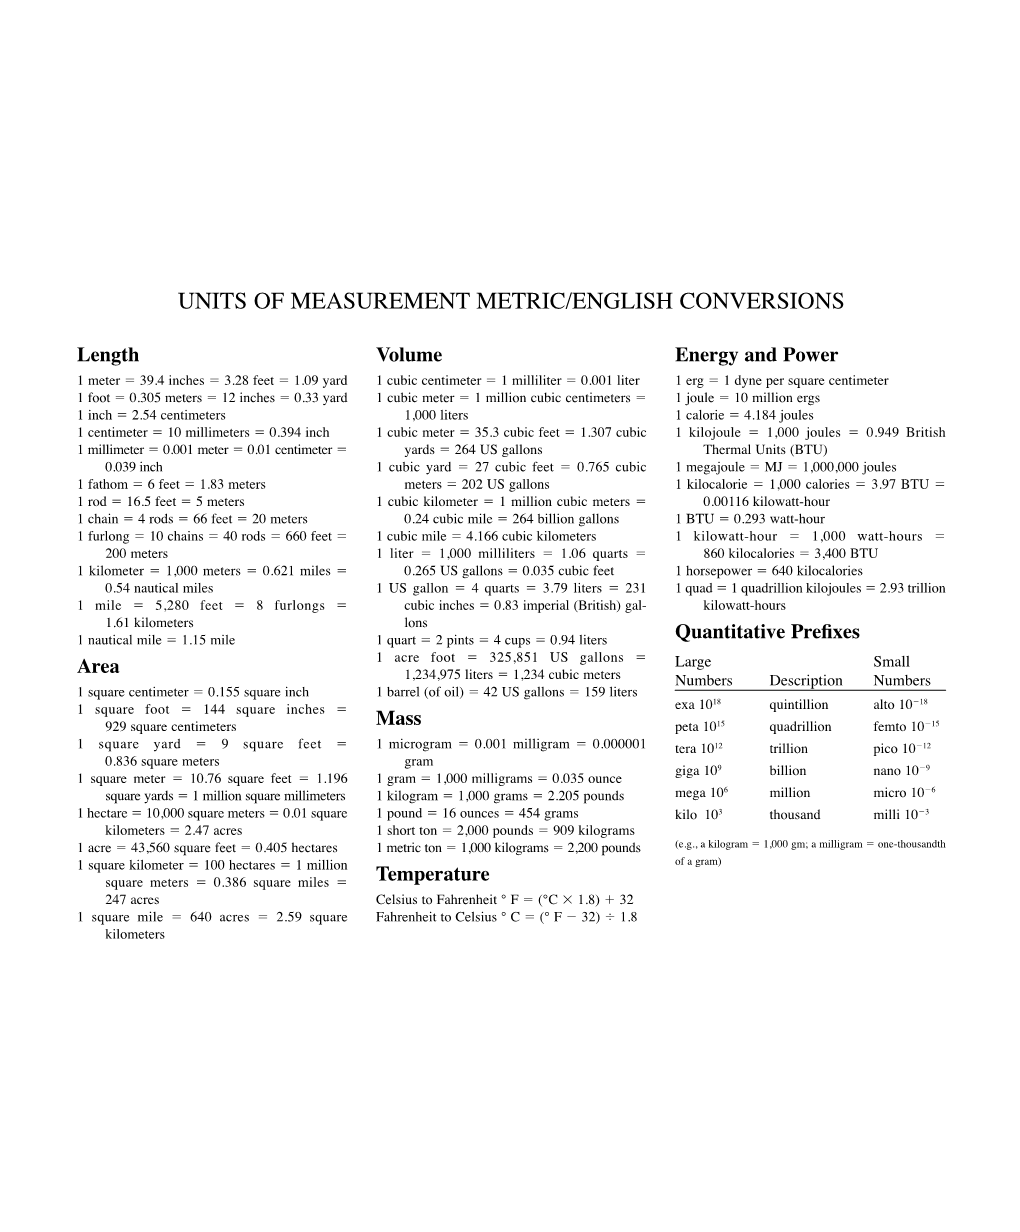 Units of Measurement Metric/English Conversions